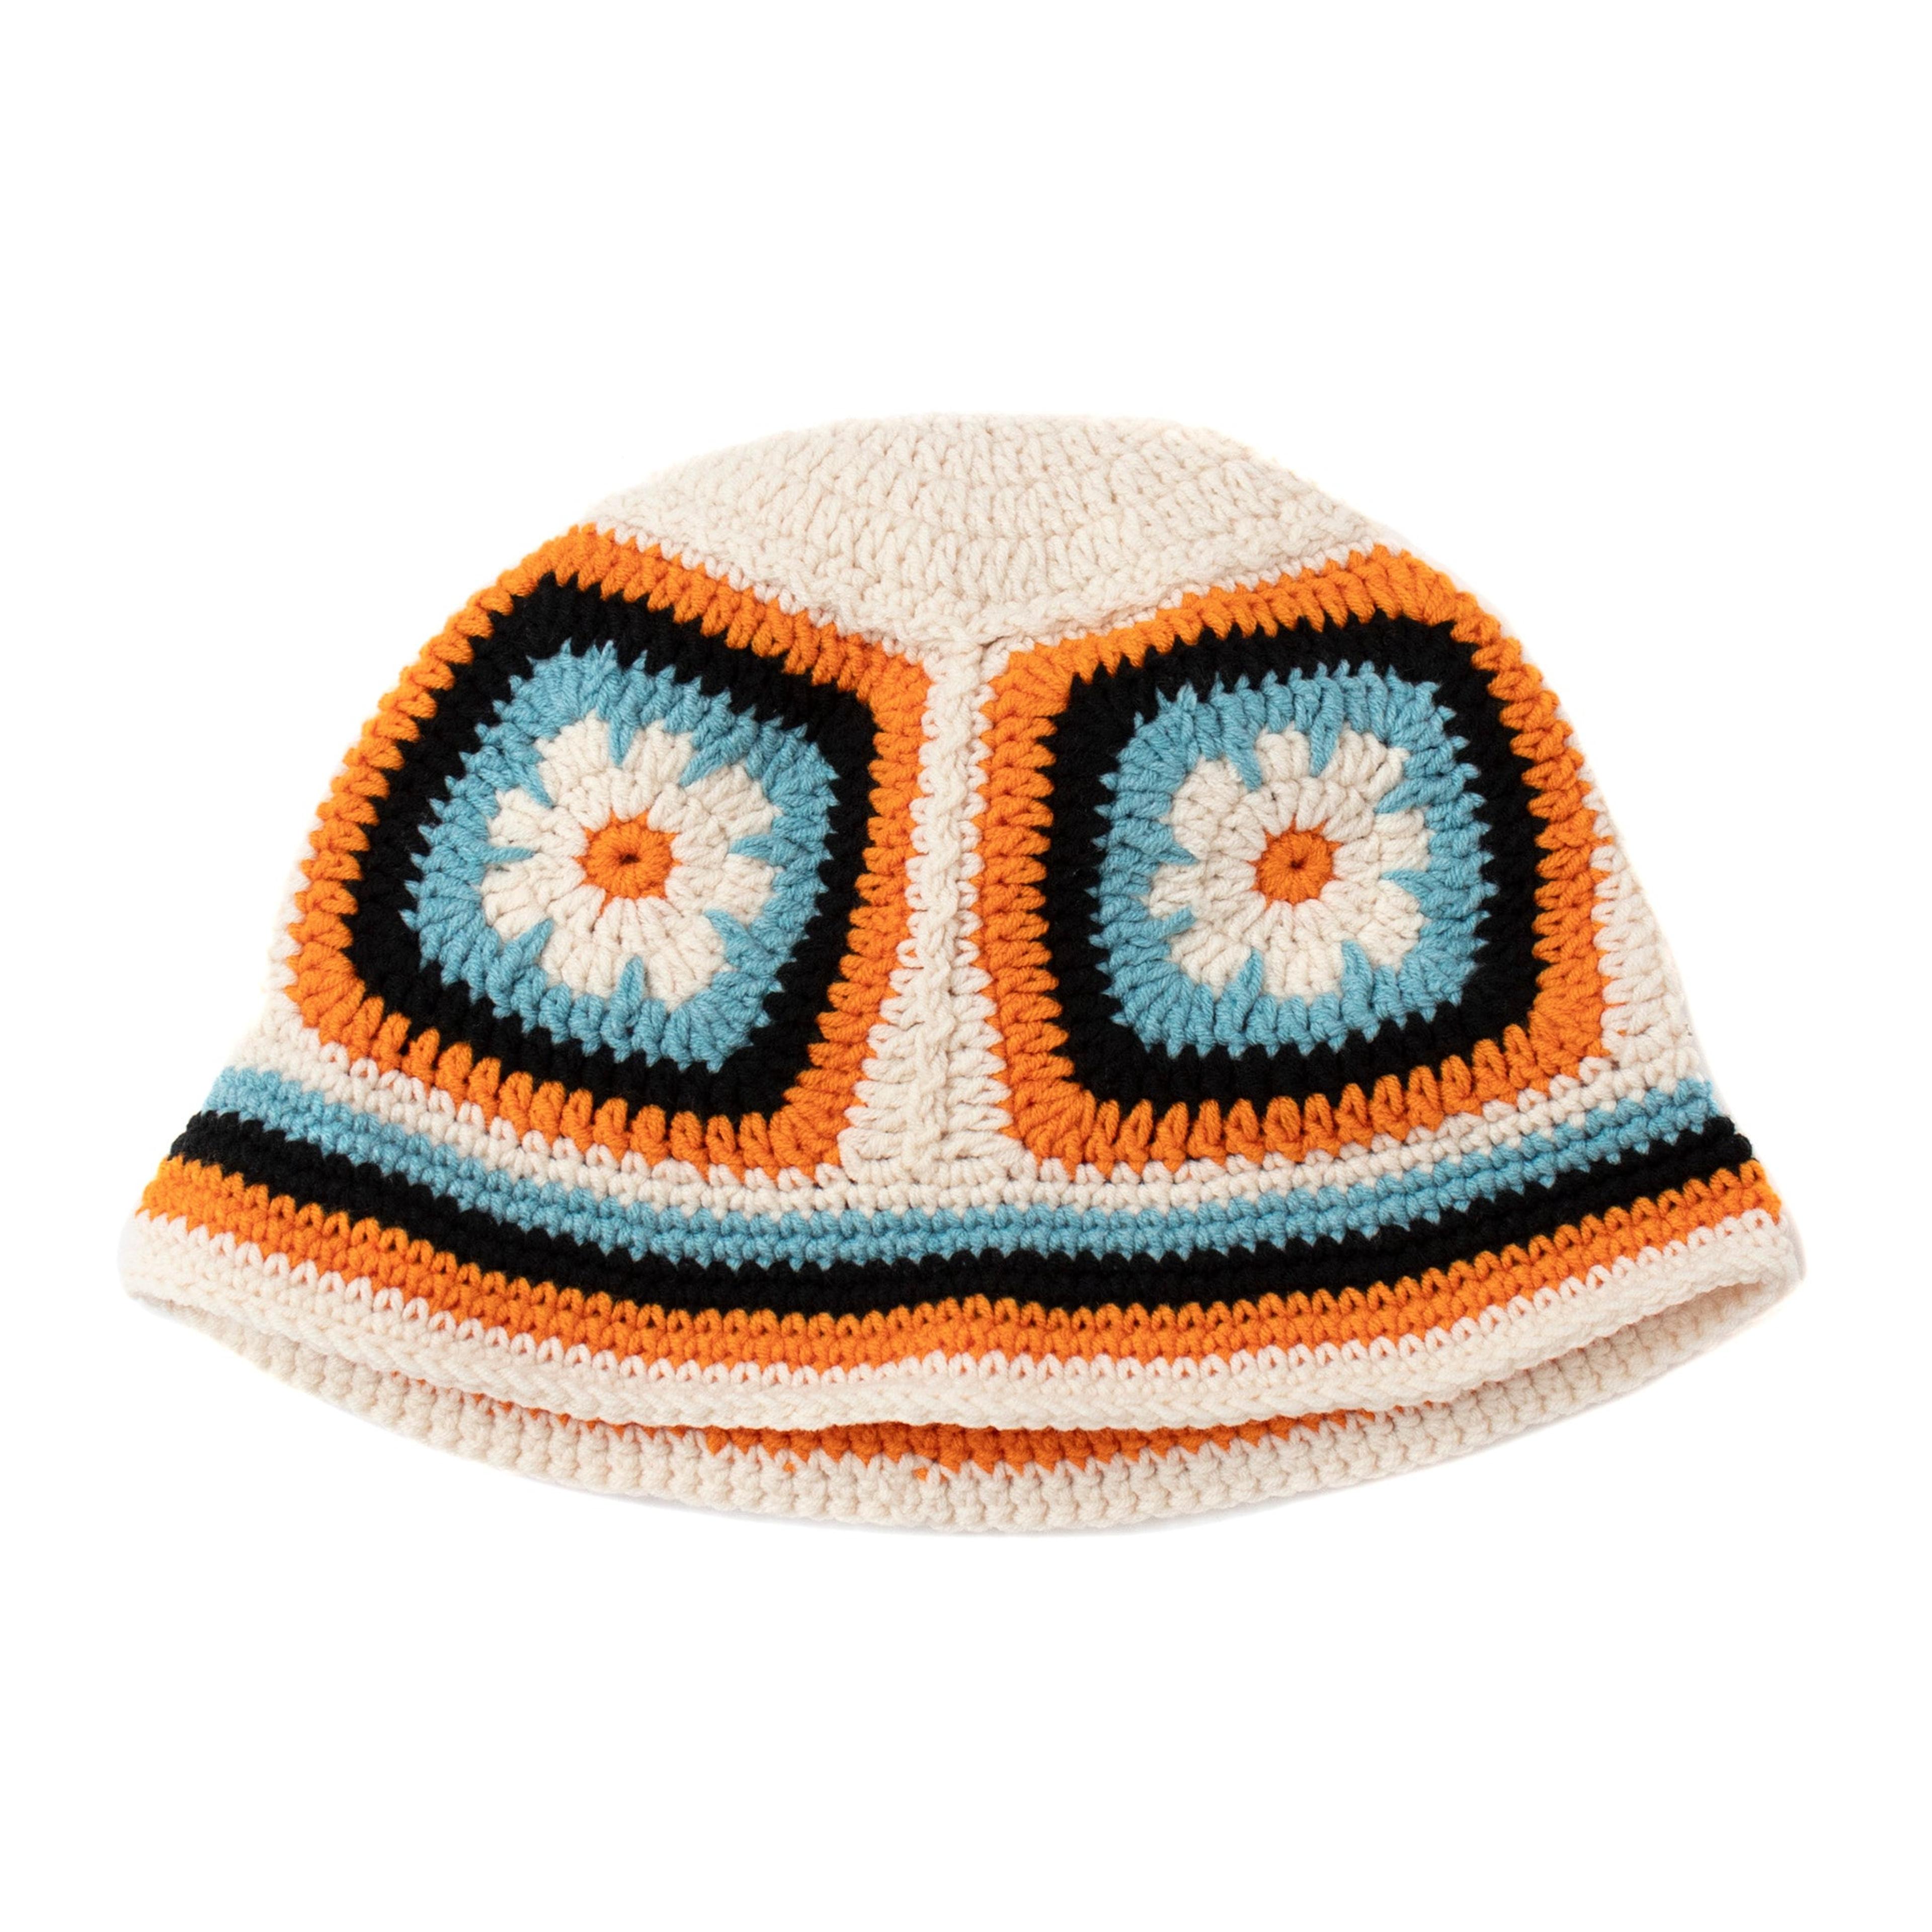 Alternate View 1 of Summer Flower Crochet Bucket Hat